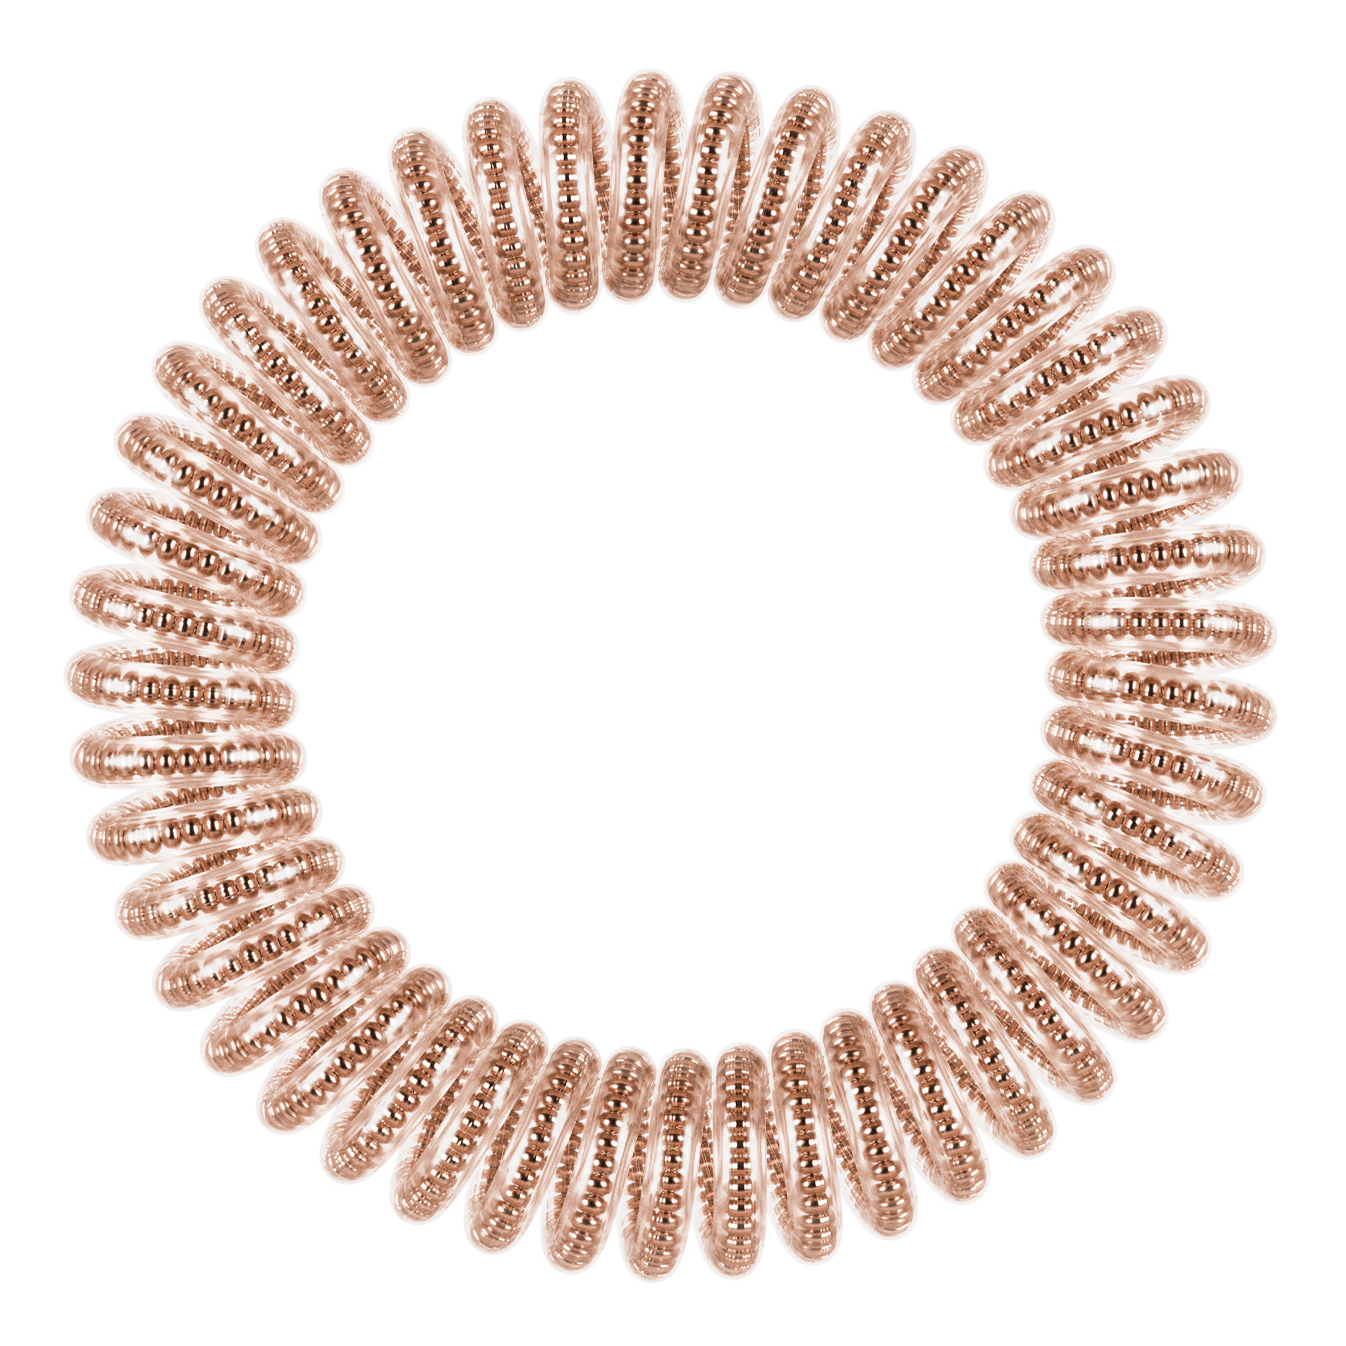 Bronze and Beads Резинка-браслет для волос